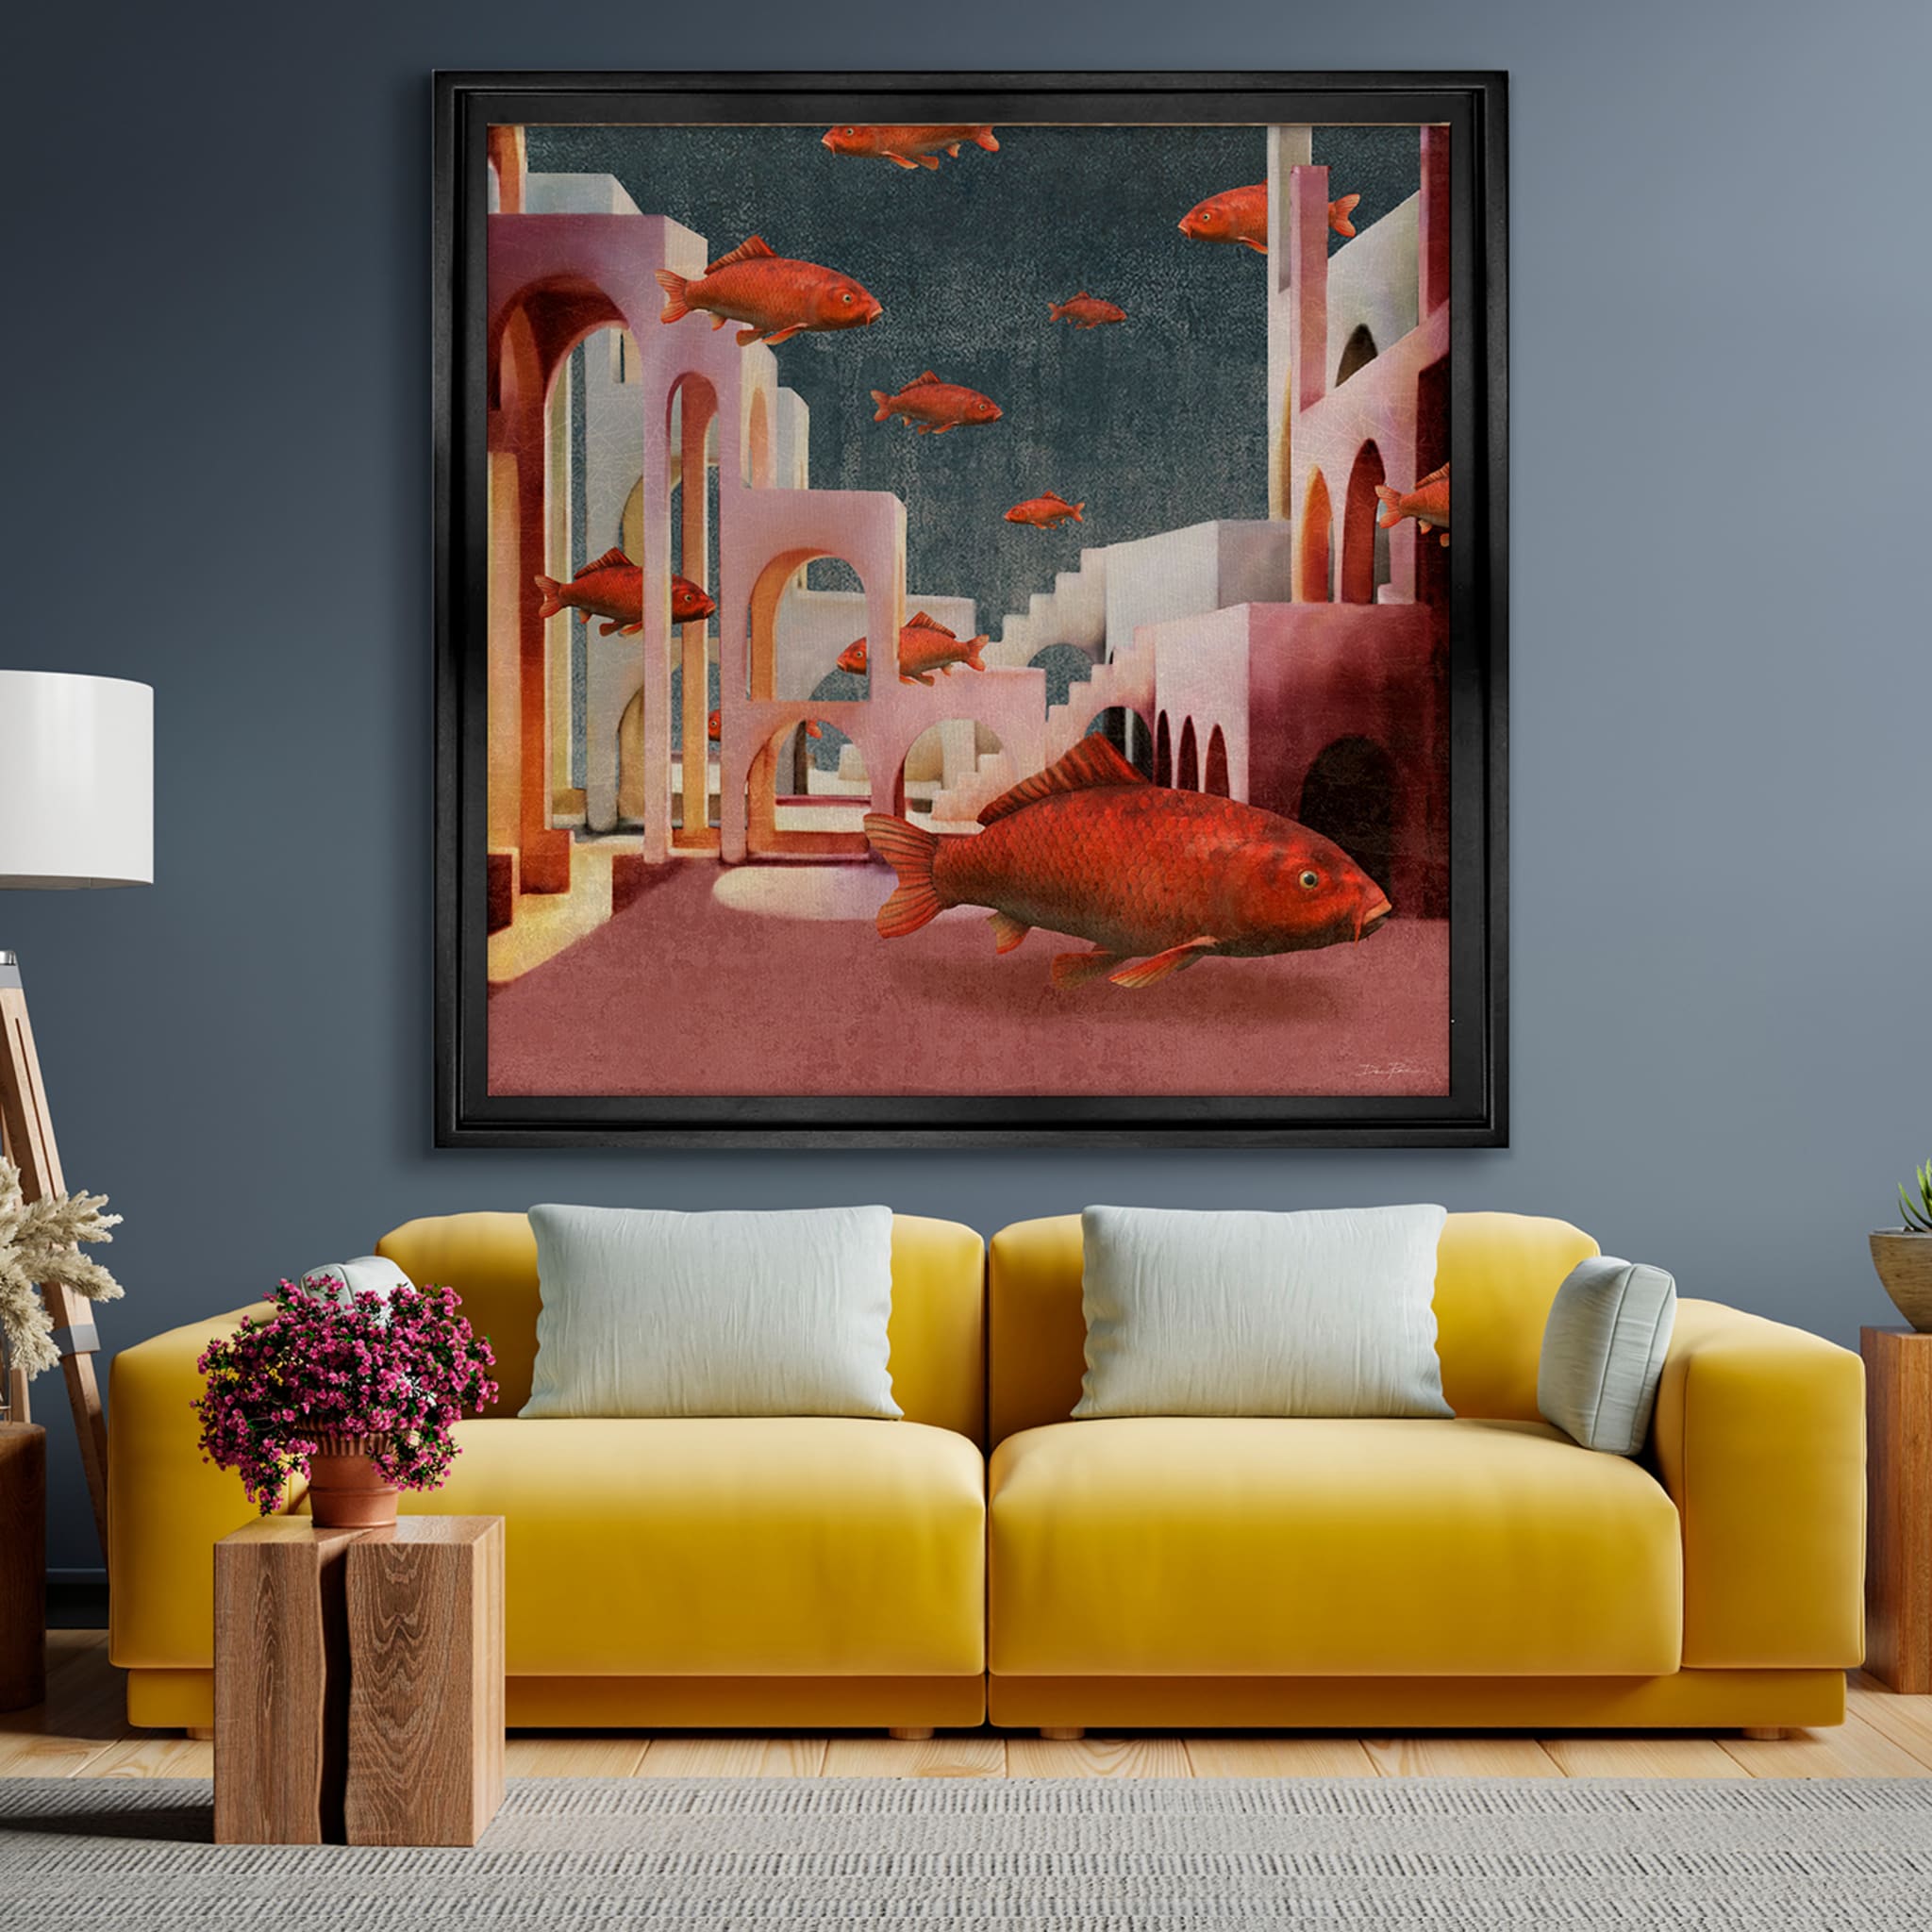 Red Fish Digital Painting - Alternative view 1